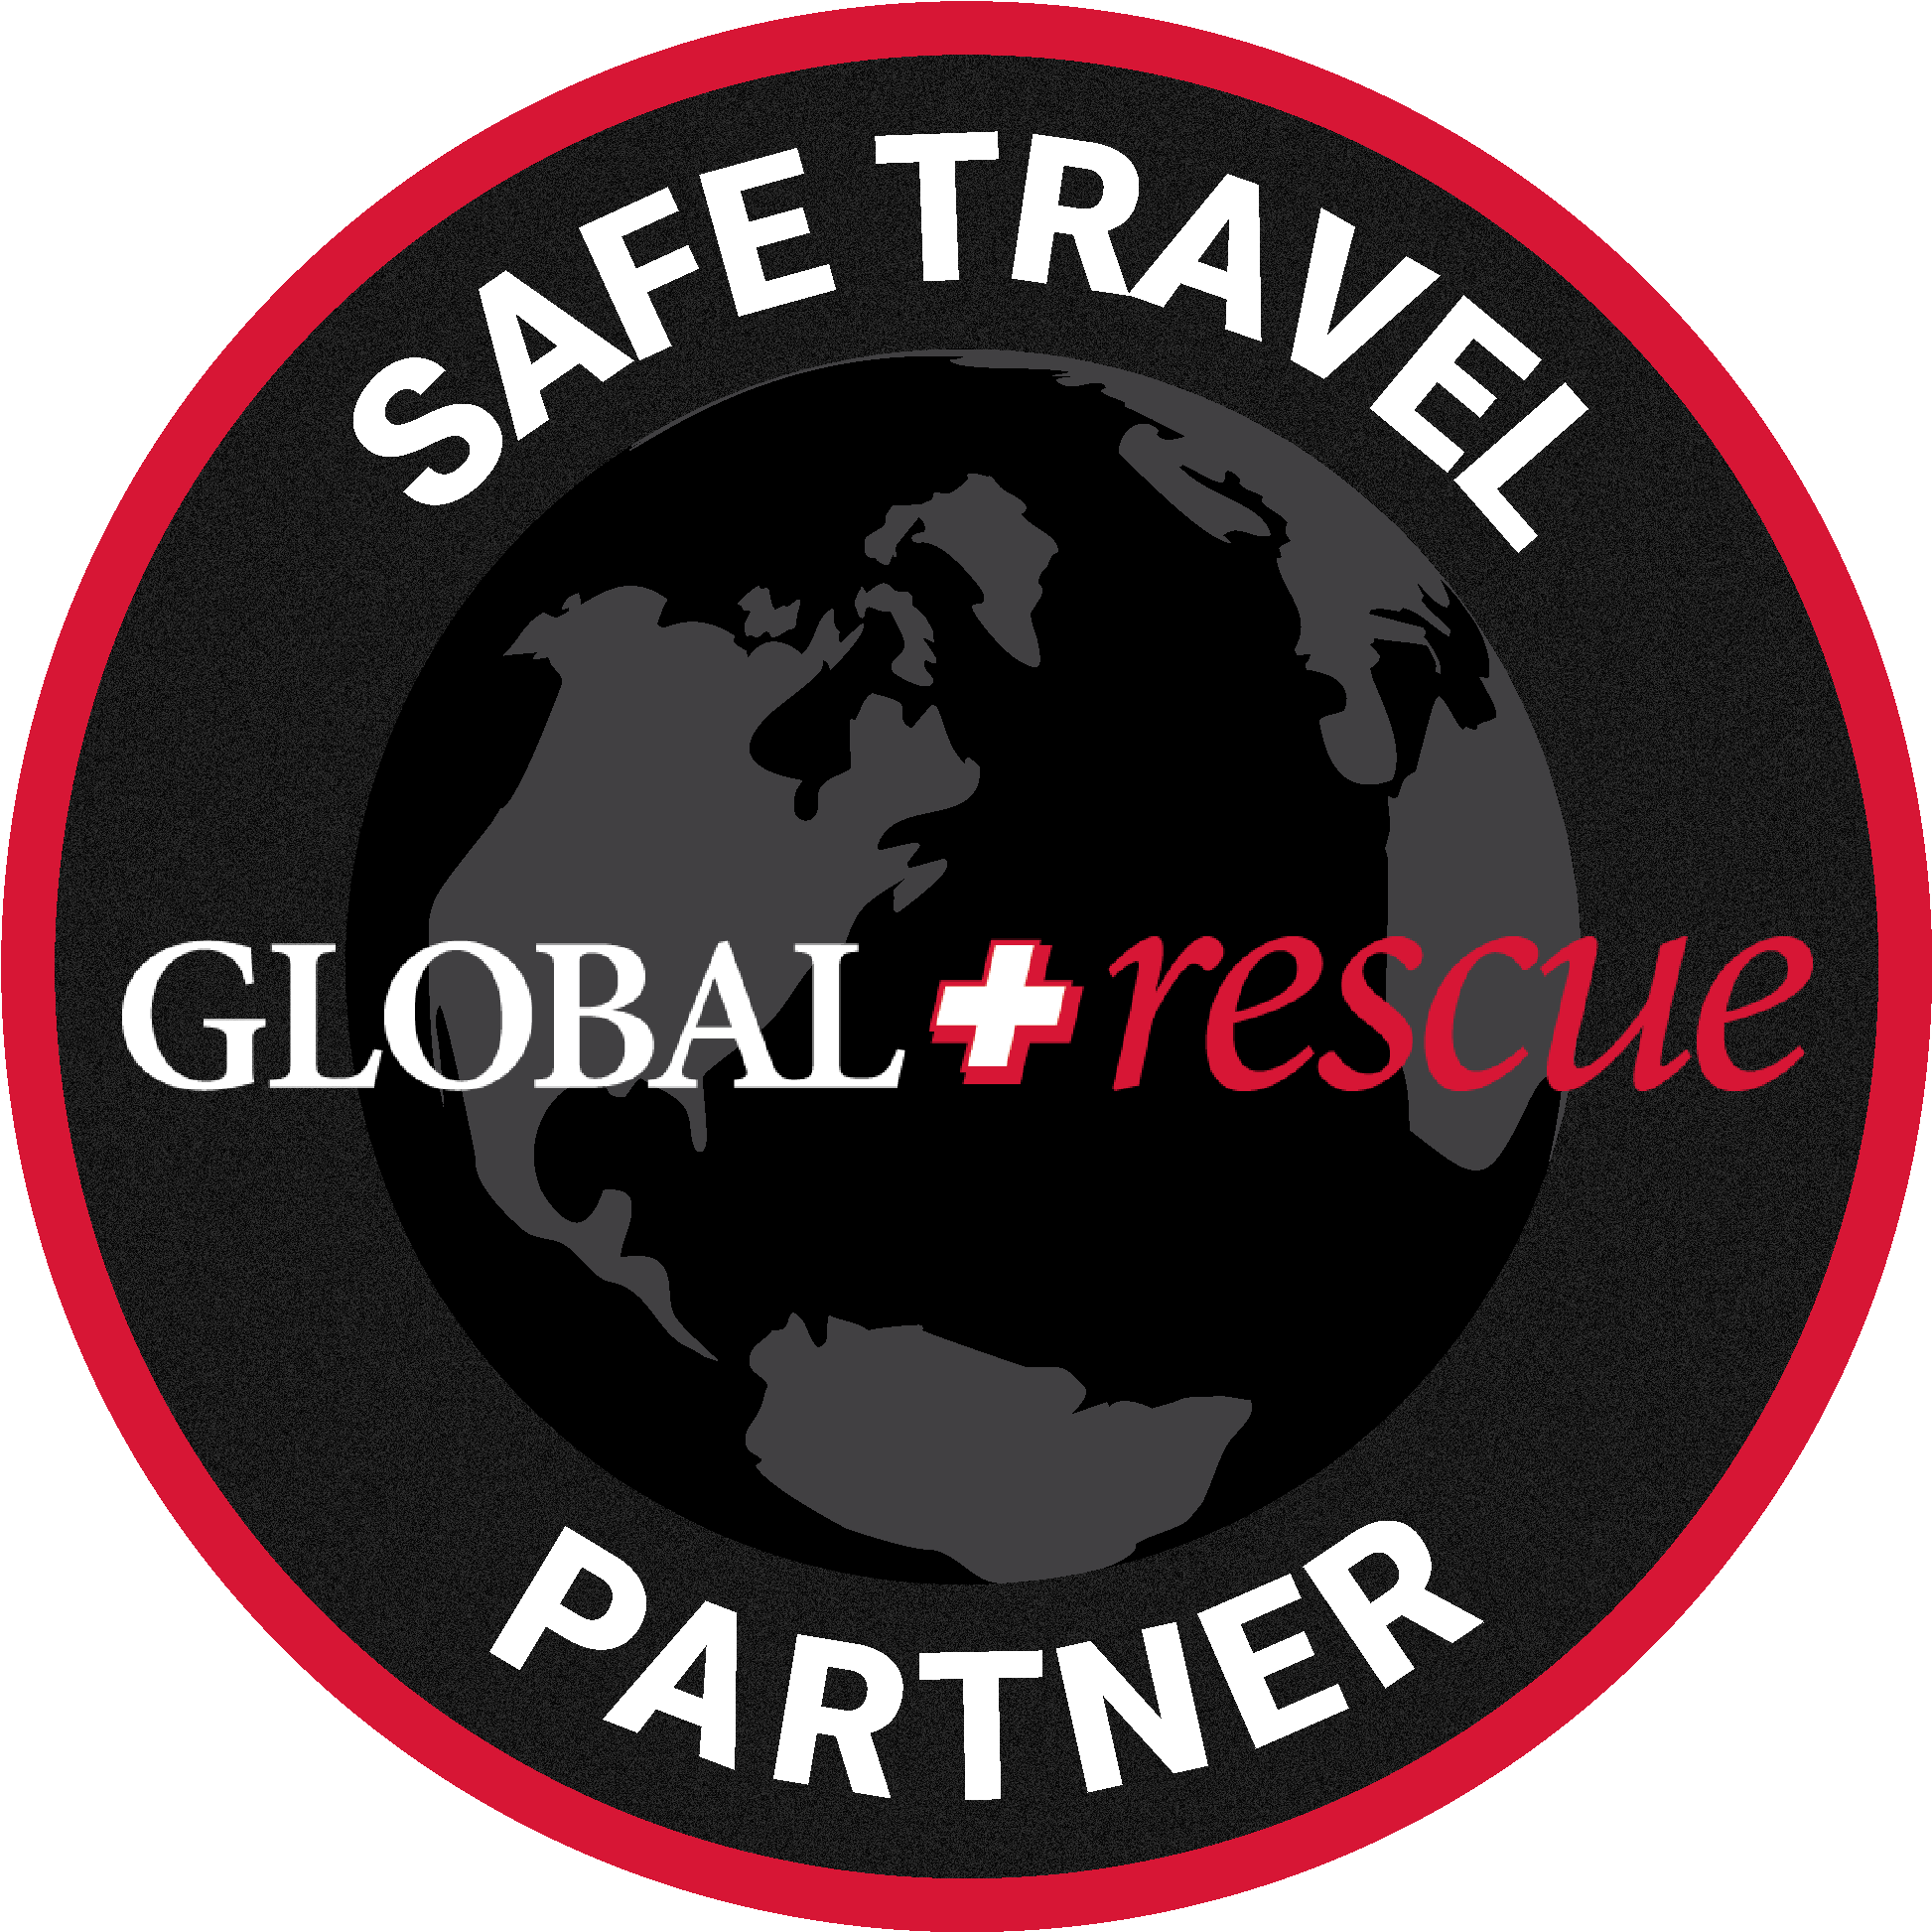 global Rescue Partner logo